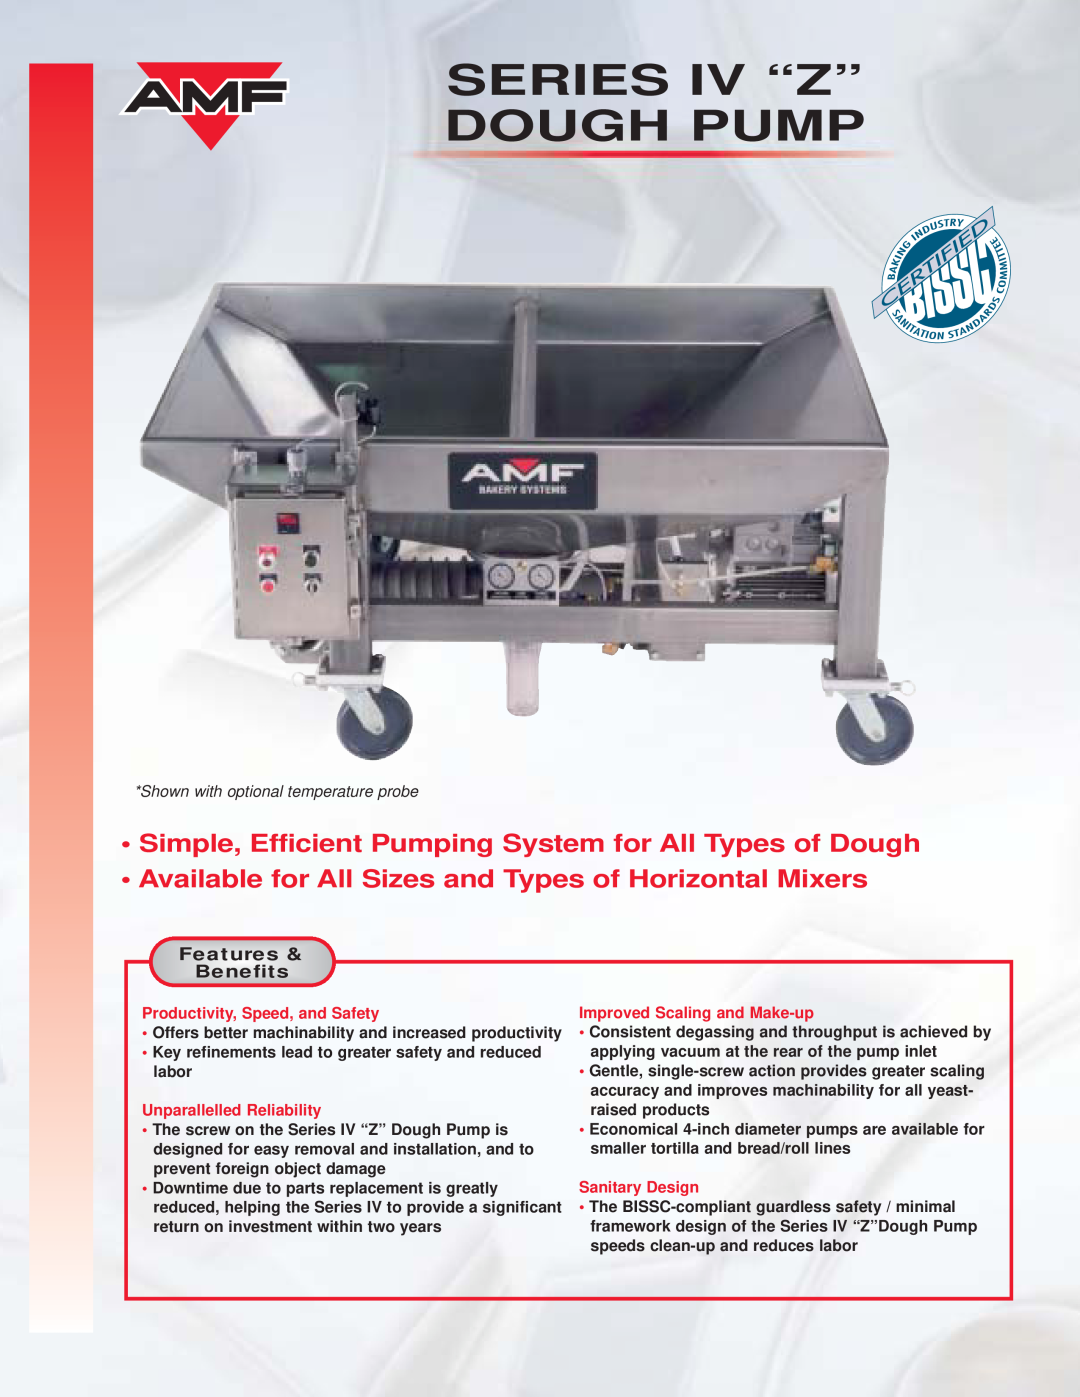 AMF Series IV manual Series Iv “Z” Dough Pump, Features, Benefits 